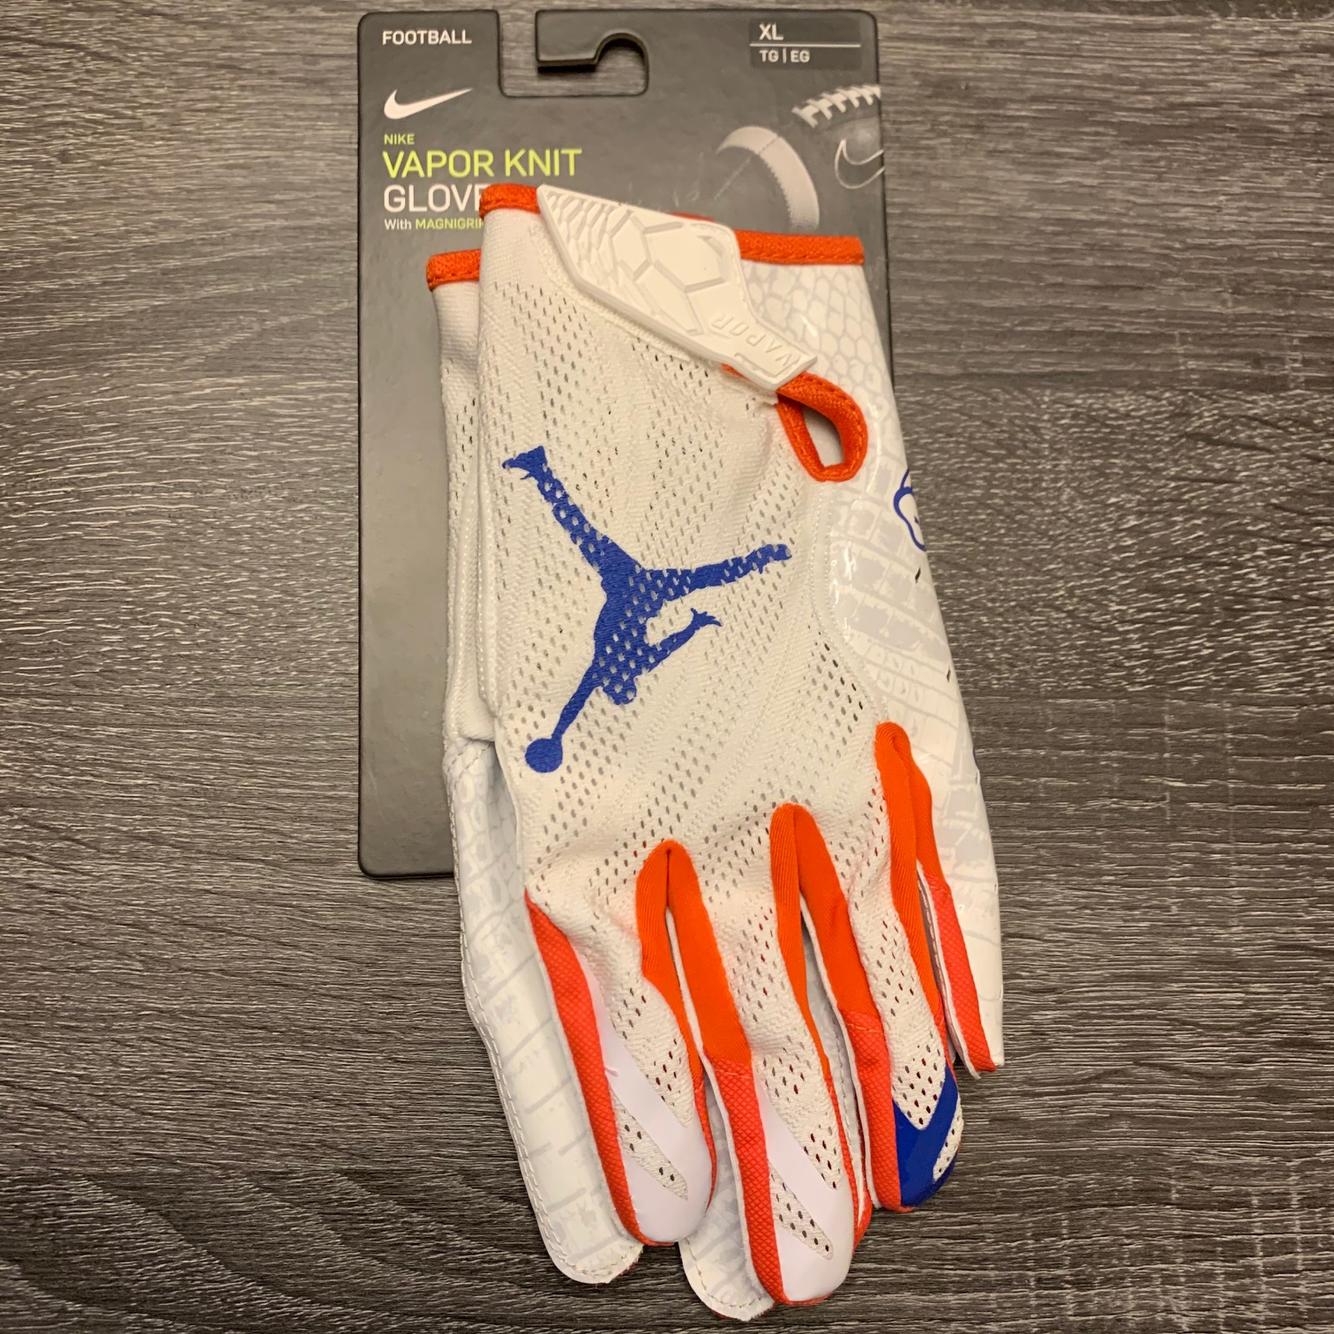 Supreme X Nike Vapor 4.0 football gloves for Sale in Calabasas, CA